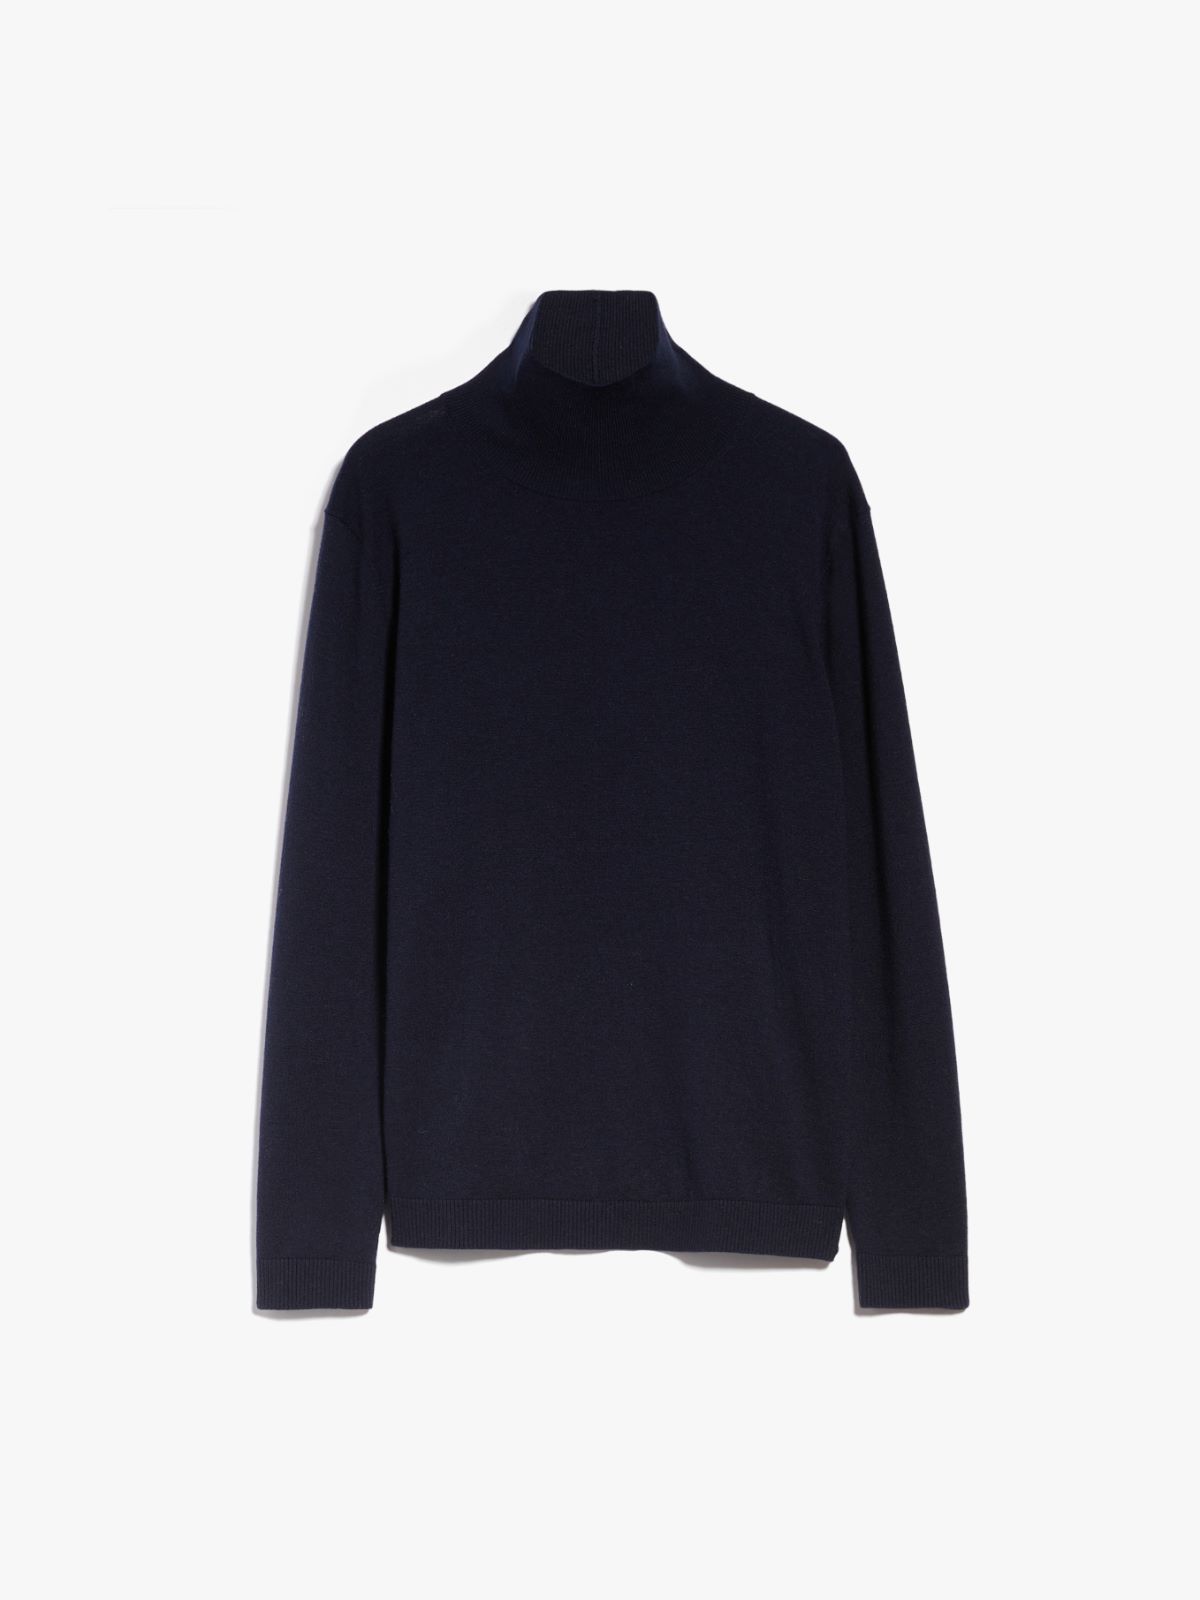 Silk and wool yarn sweater, ultramarine | Weekend Max Mara